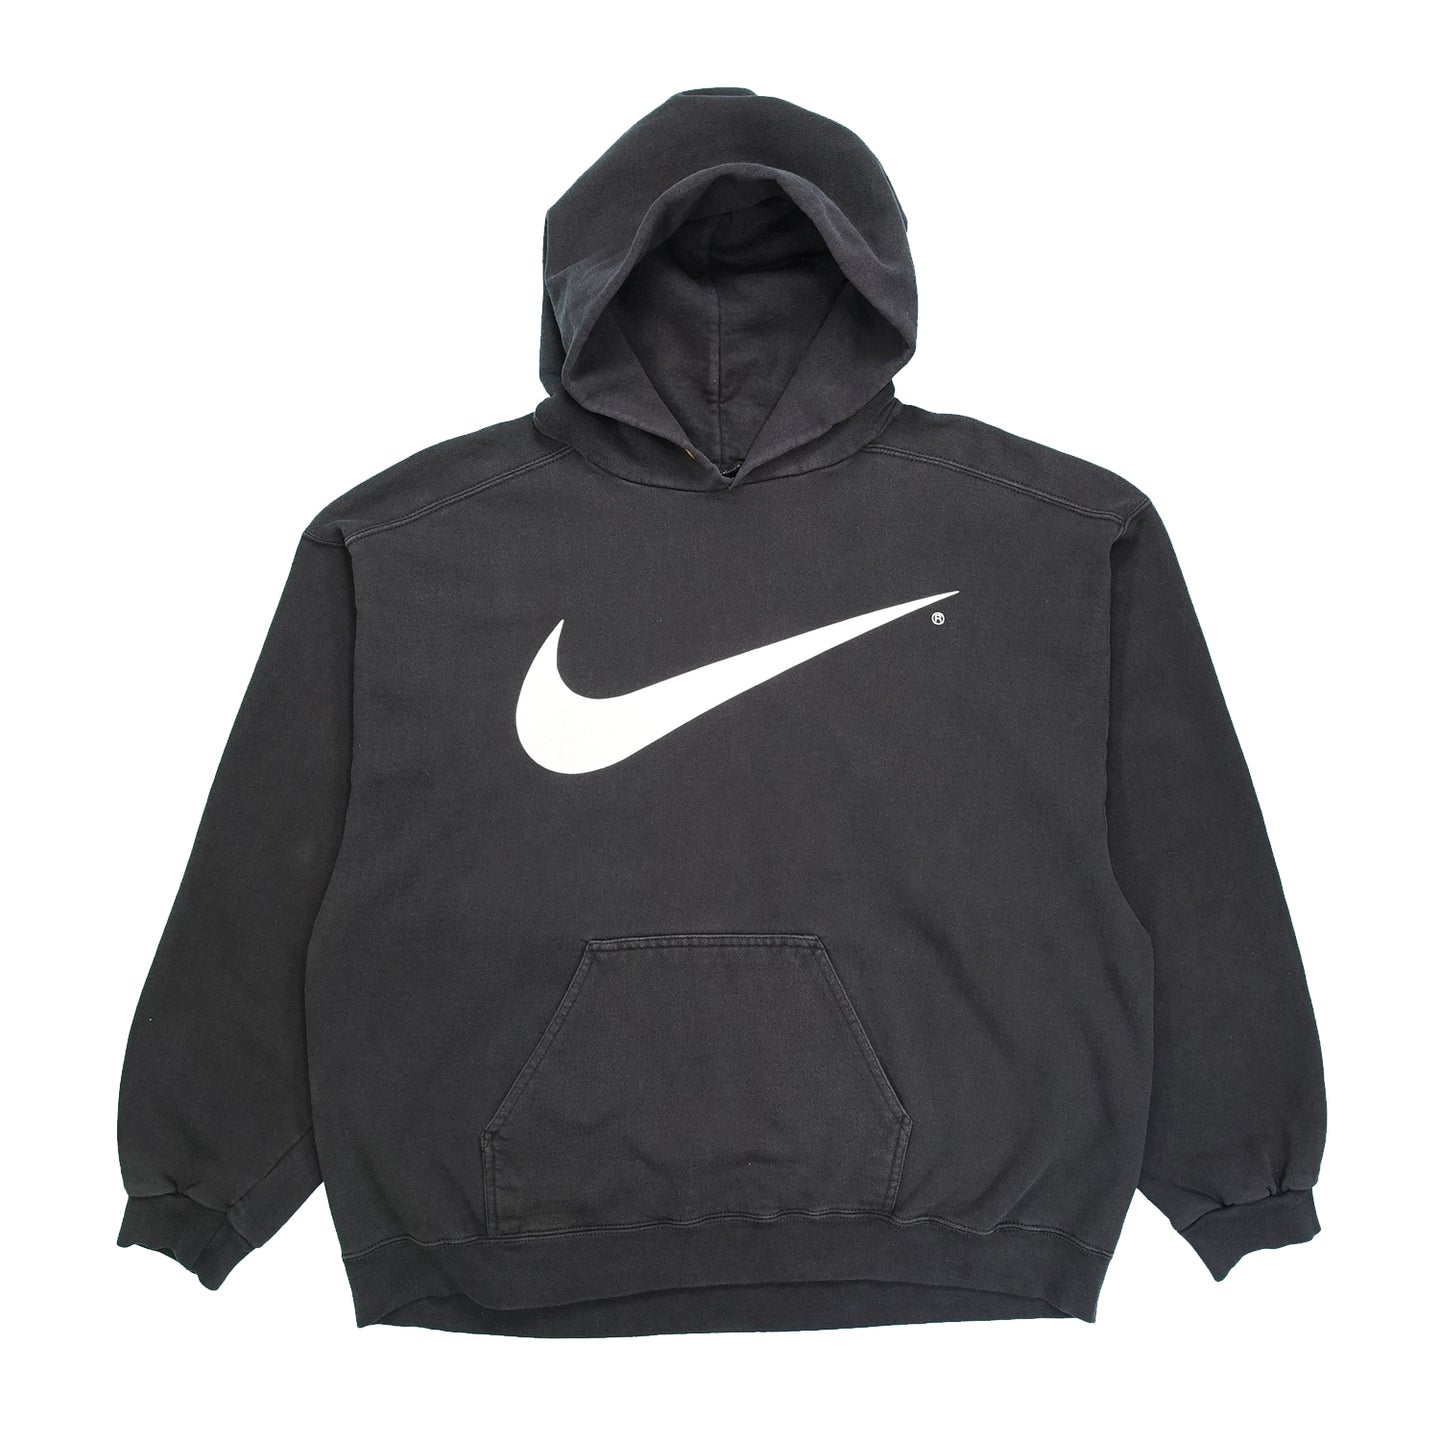 '90s Nike big swoosh hoodie L